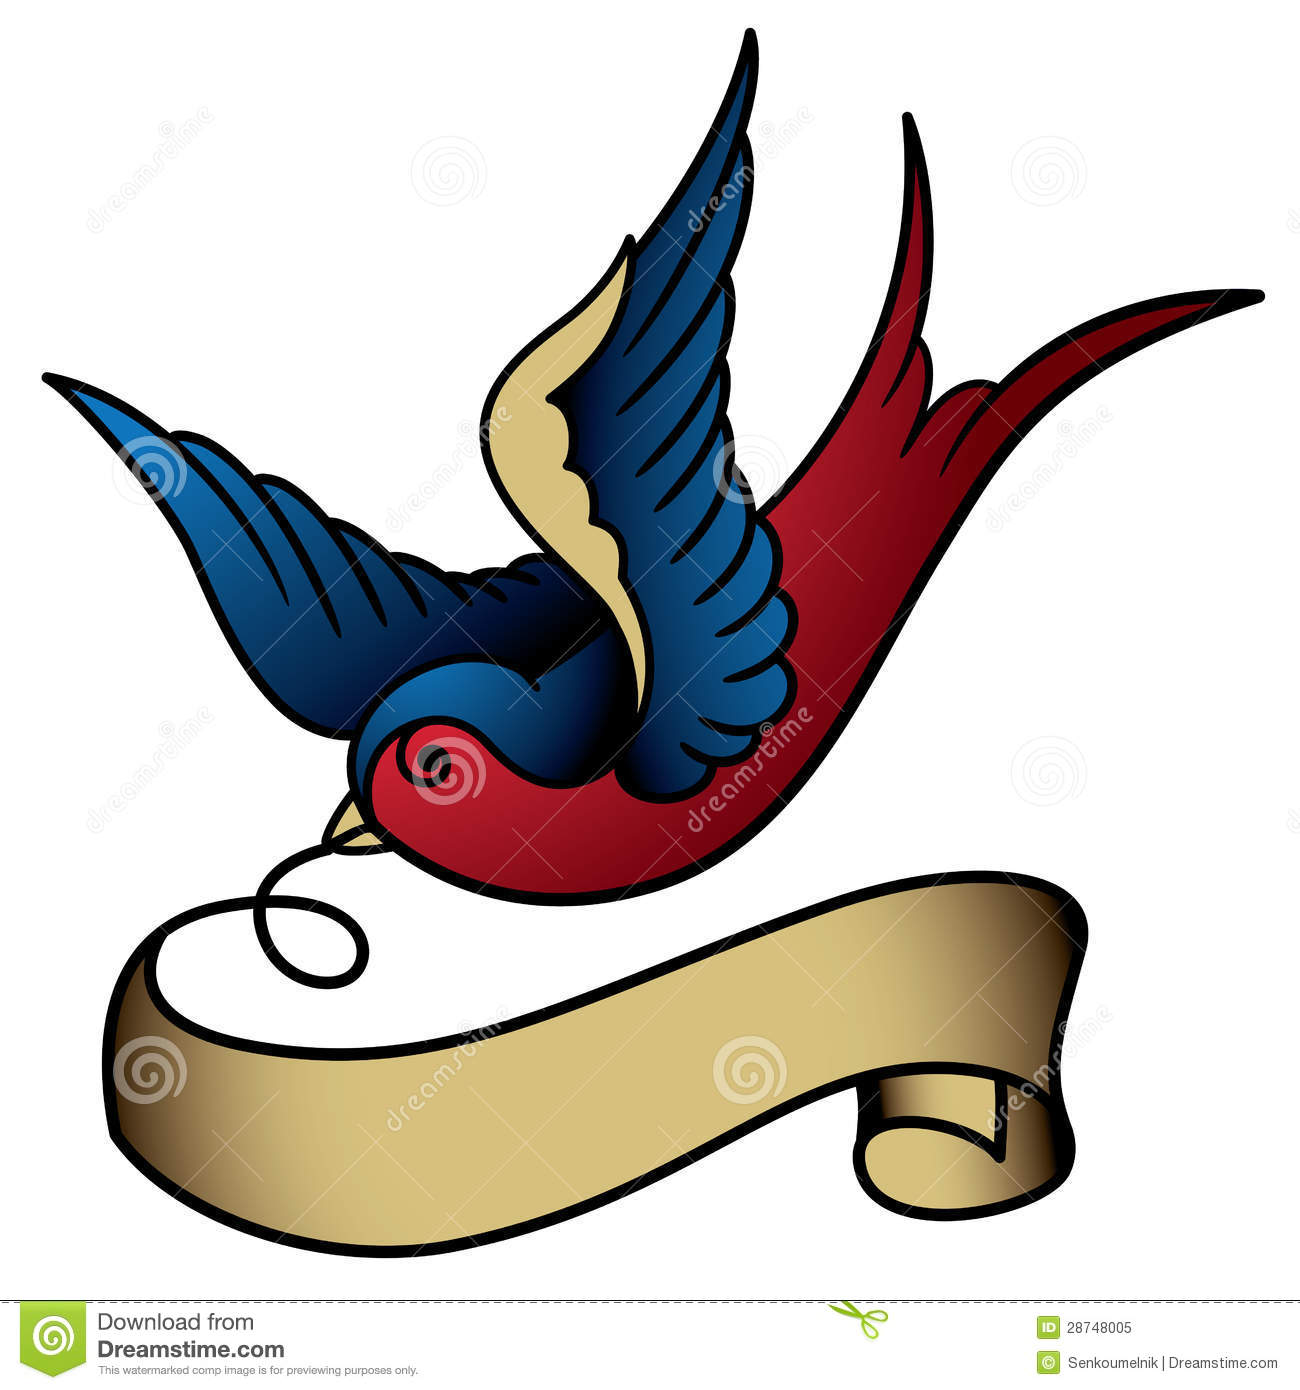 Swallow Tattoo Royalty Free Stock Photo   Image  28748005